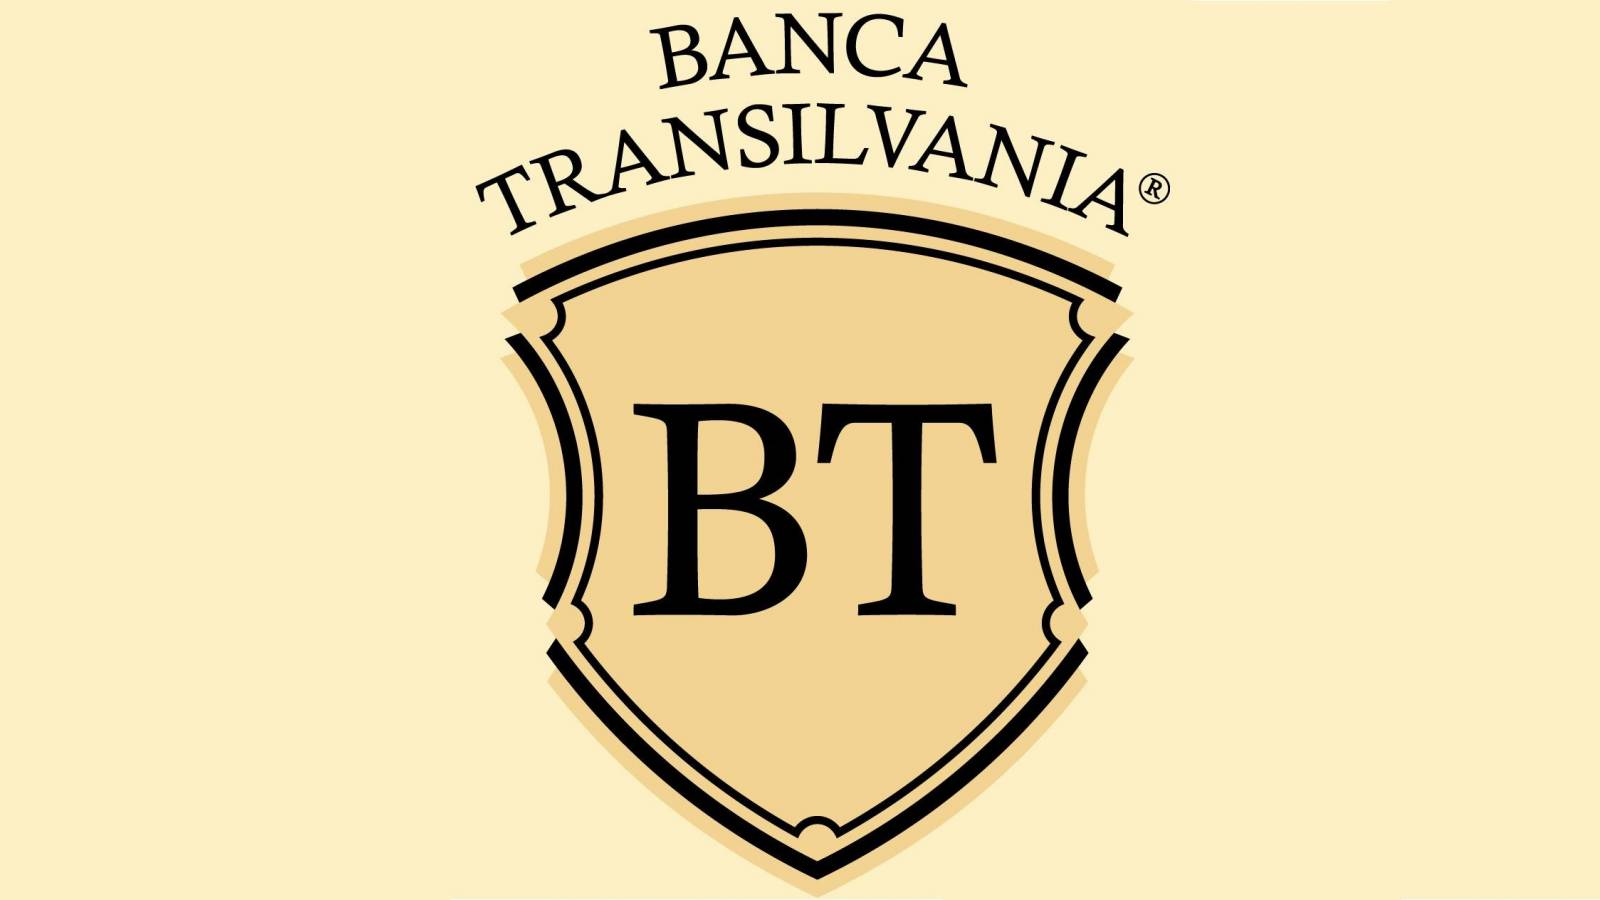 Visualisierung von BANCA Transilvania